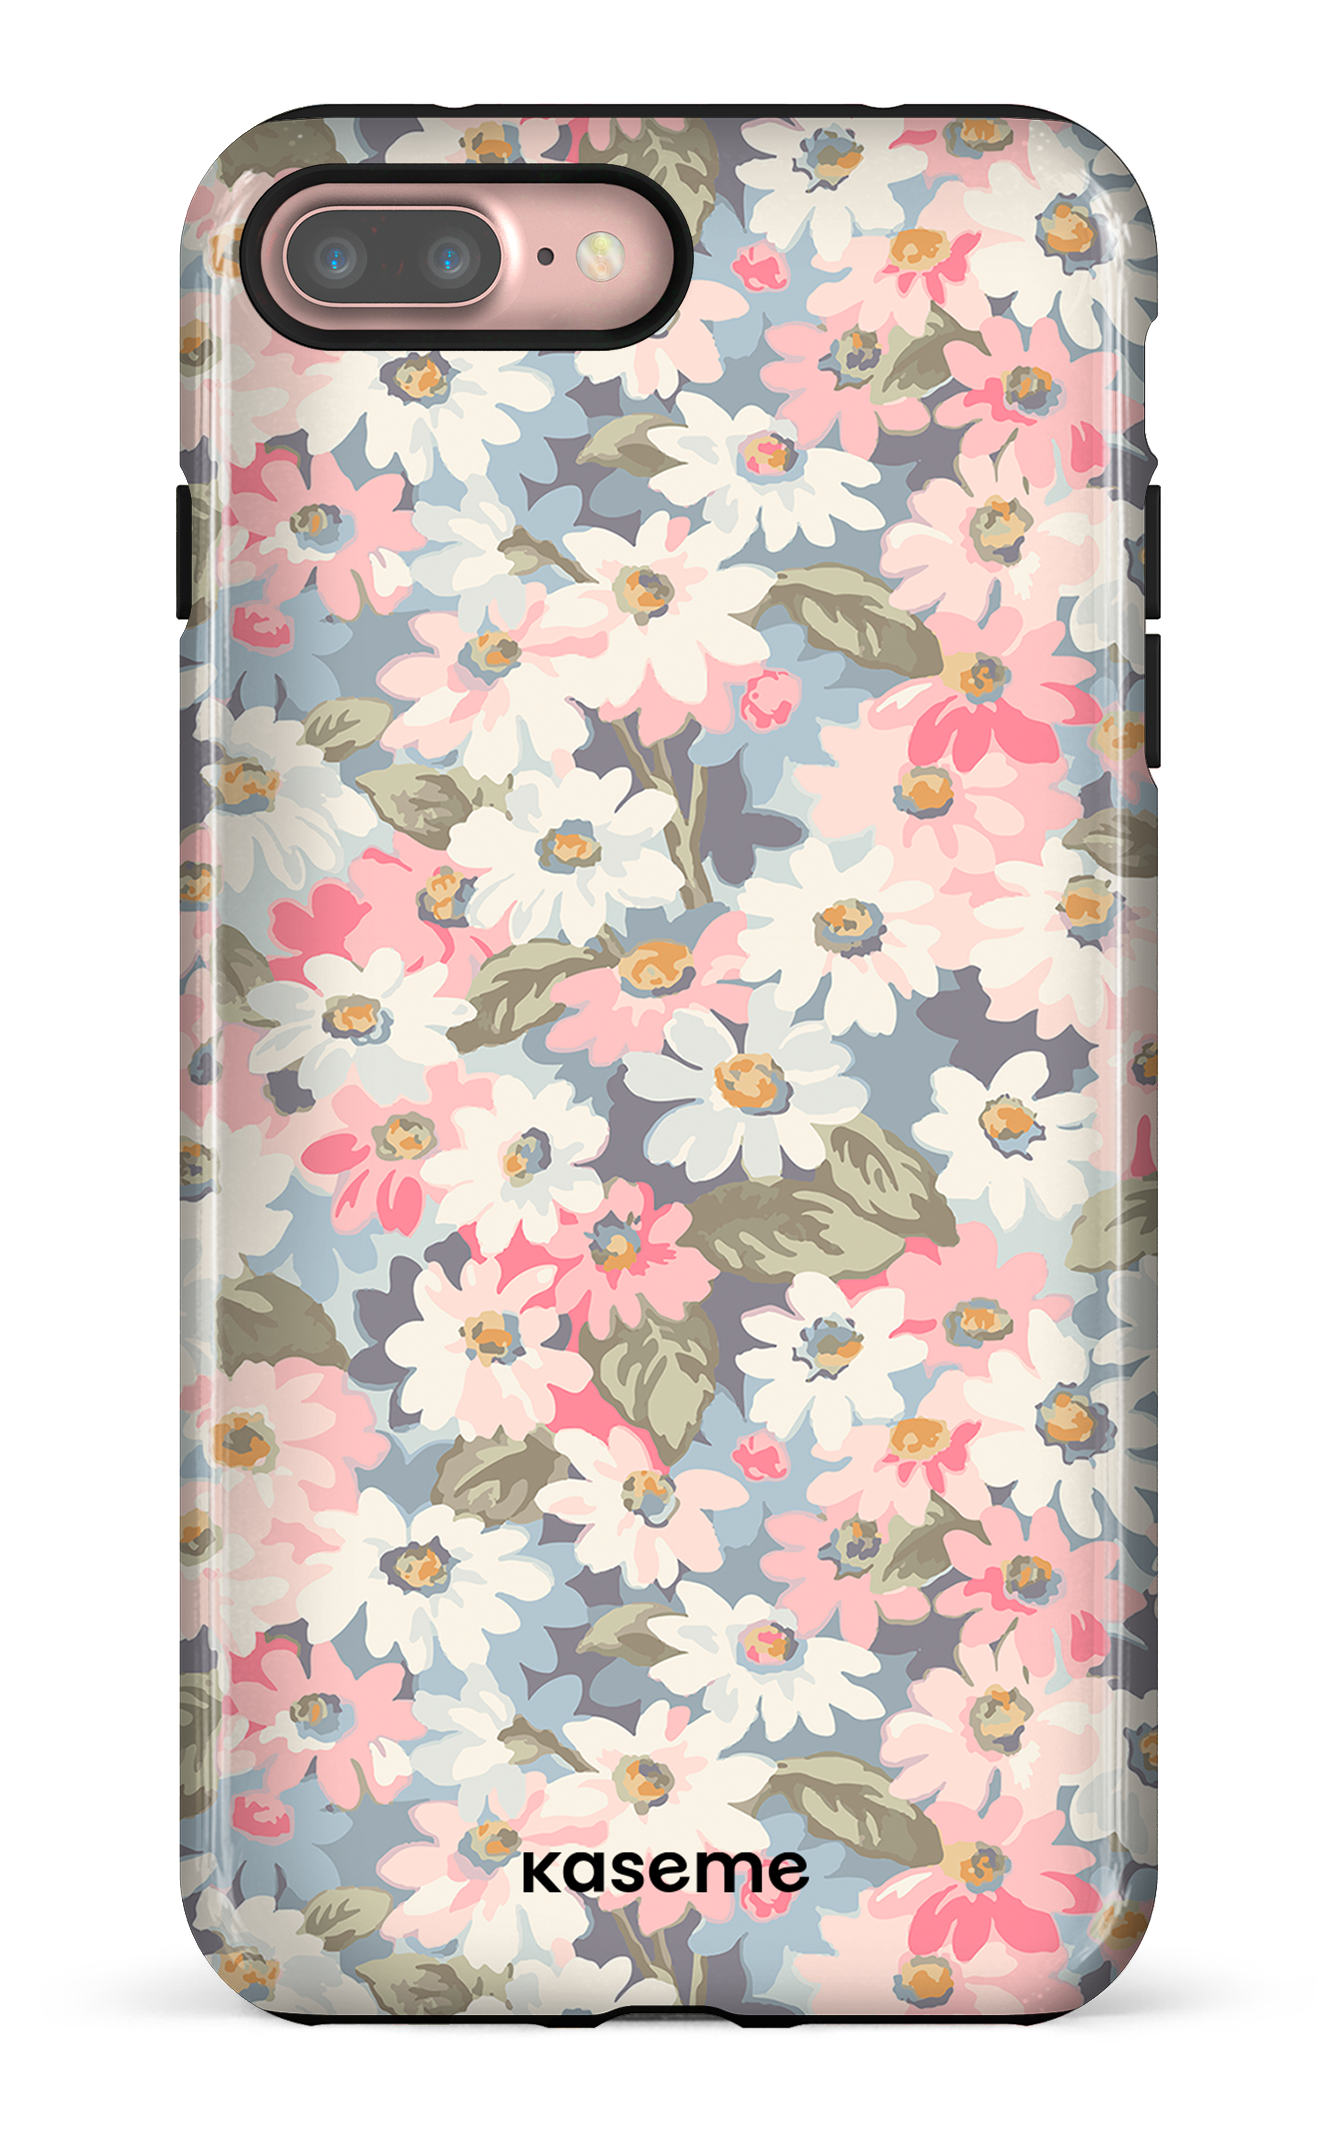 Mosaic of blooms - iPhone 7 Plus